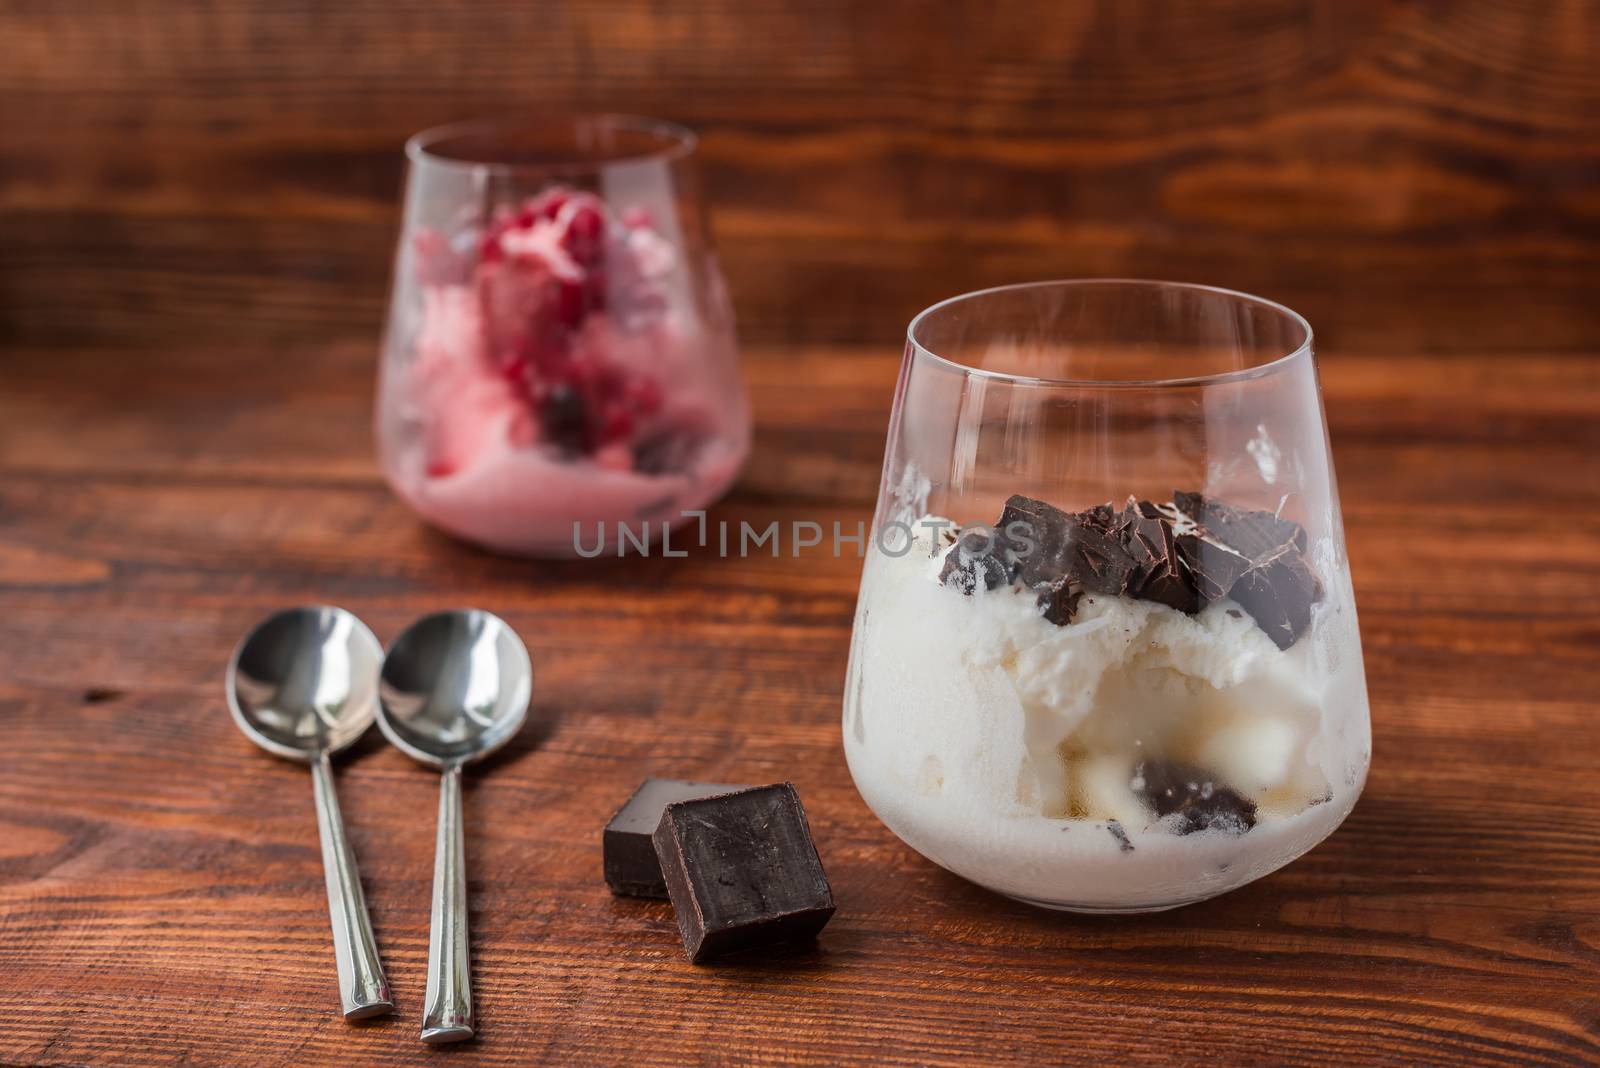 Vanilla and berry ice cream with chocolate by Seva_blsv